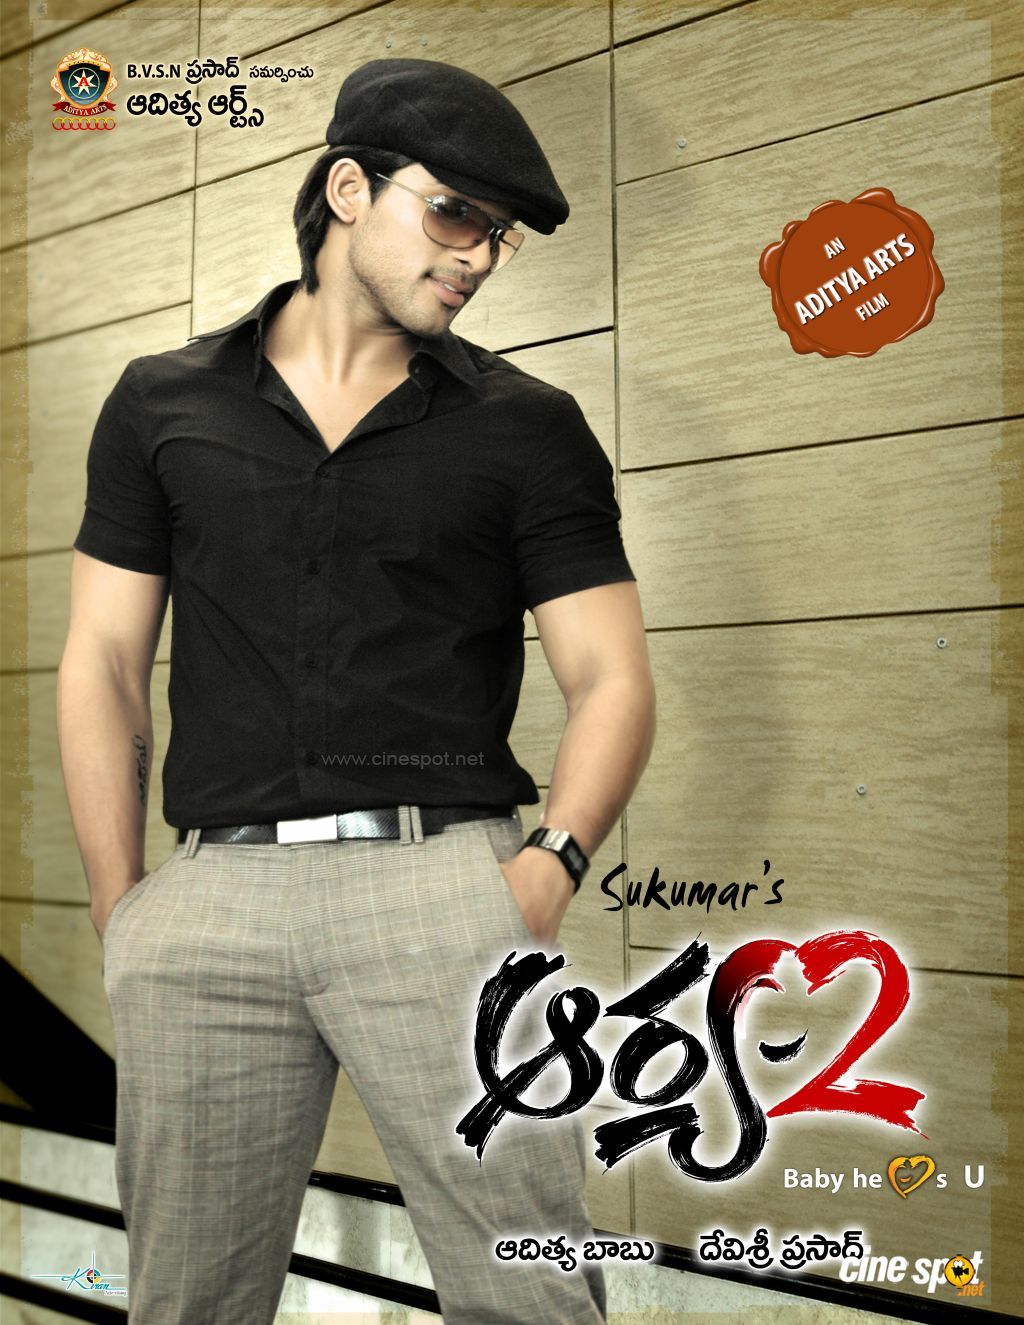 Arya 2 (2009) Hindi Full Movie Download HD. New Movie. Latest Movie. Hollywood Movie